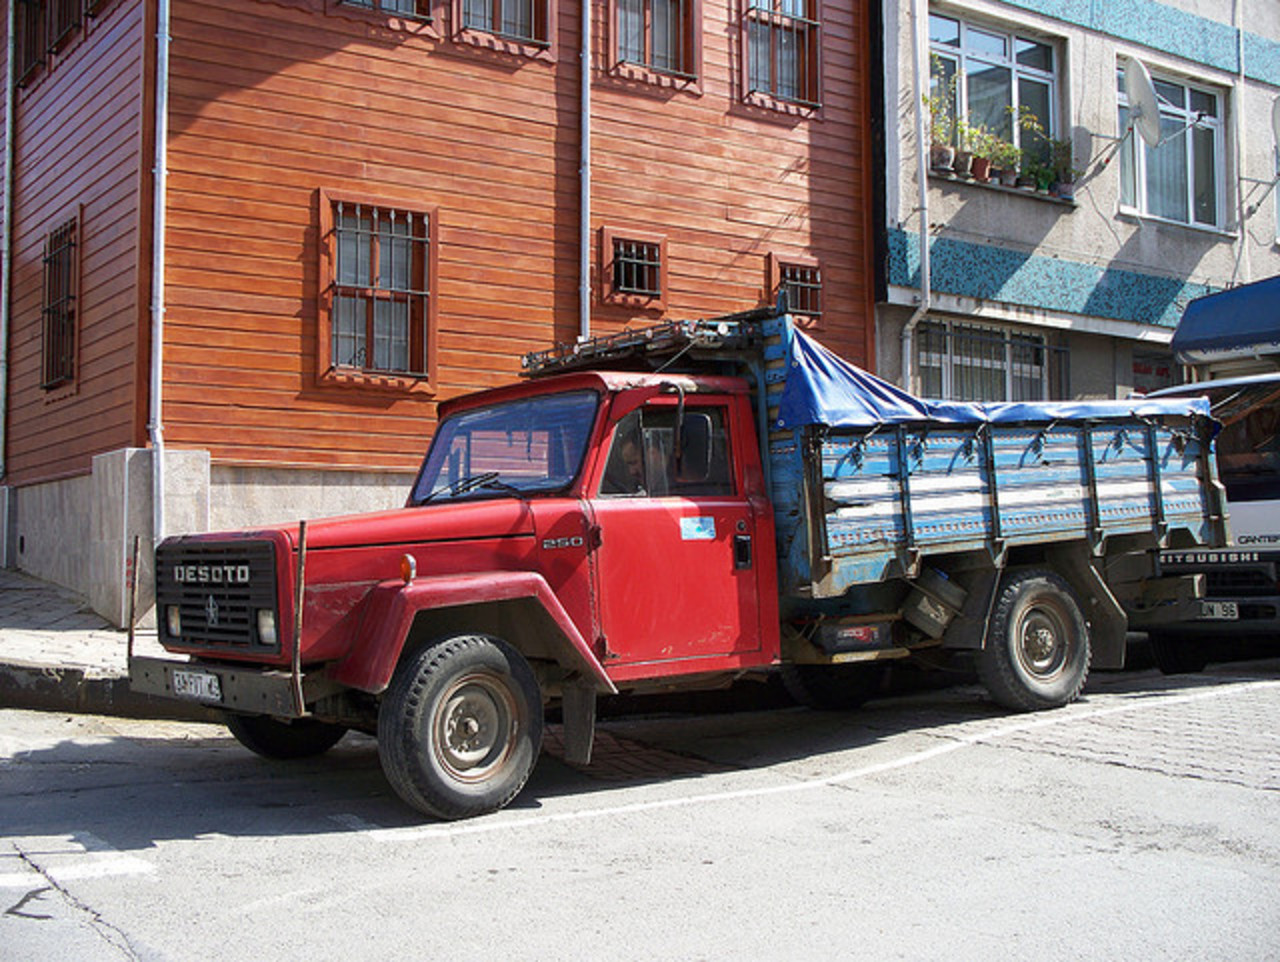 De Soto truck | Flickr - Photo Sharing!